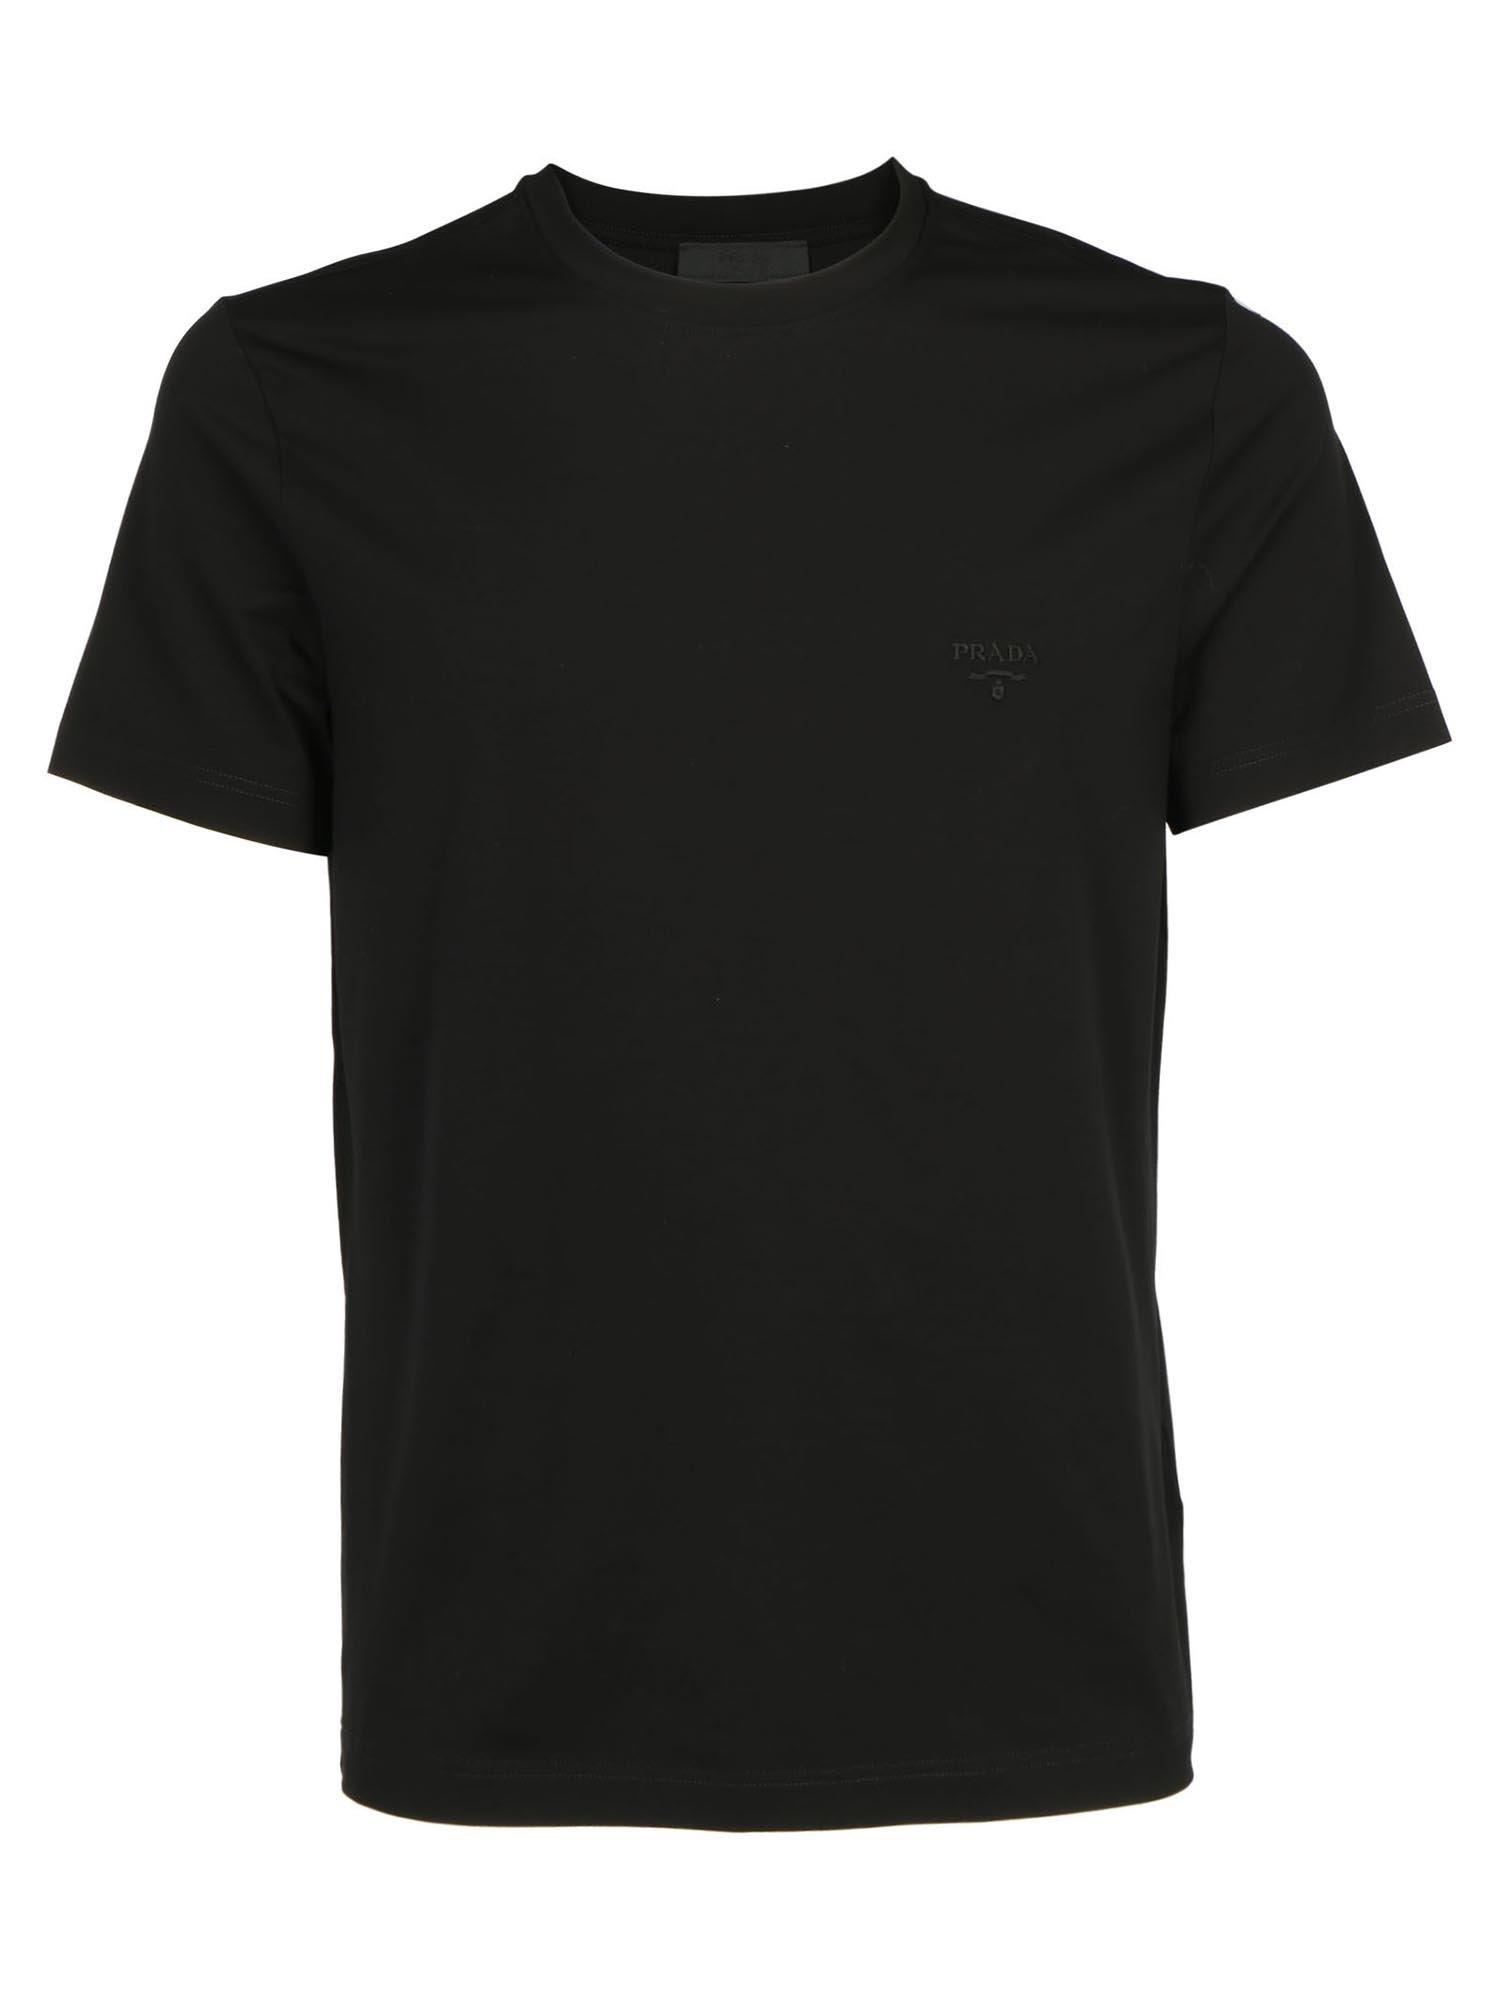 Prada Cotton Logo Motif Embroidered T-shirt in Black for Men - Lyst